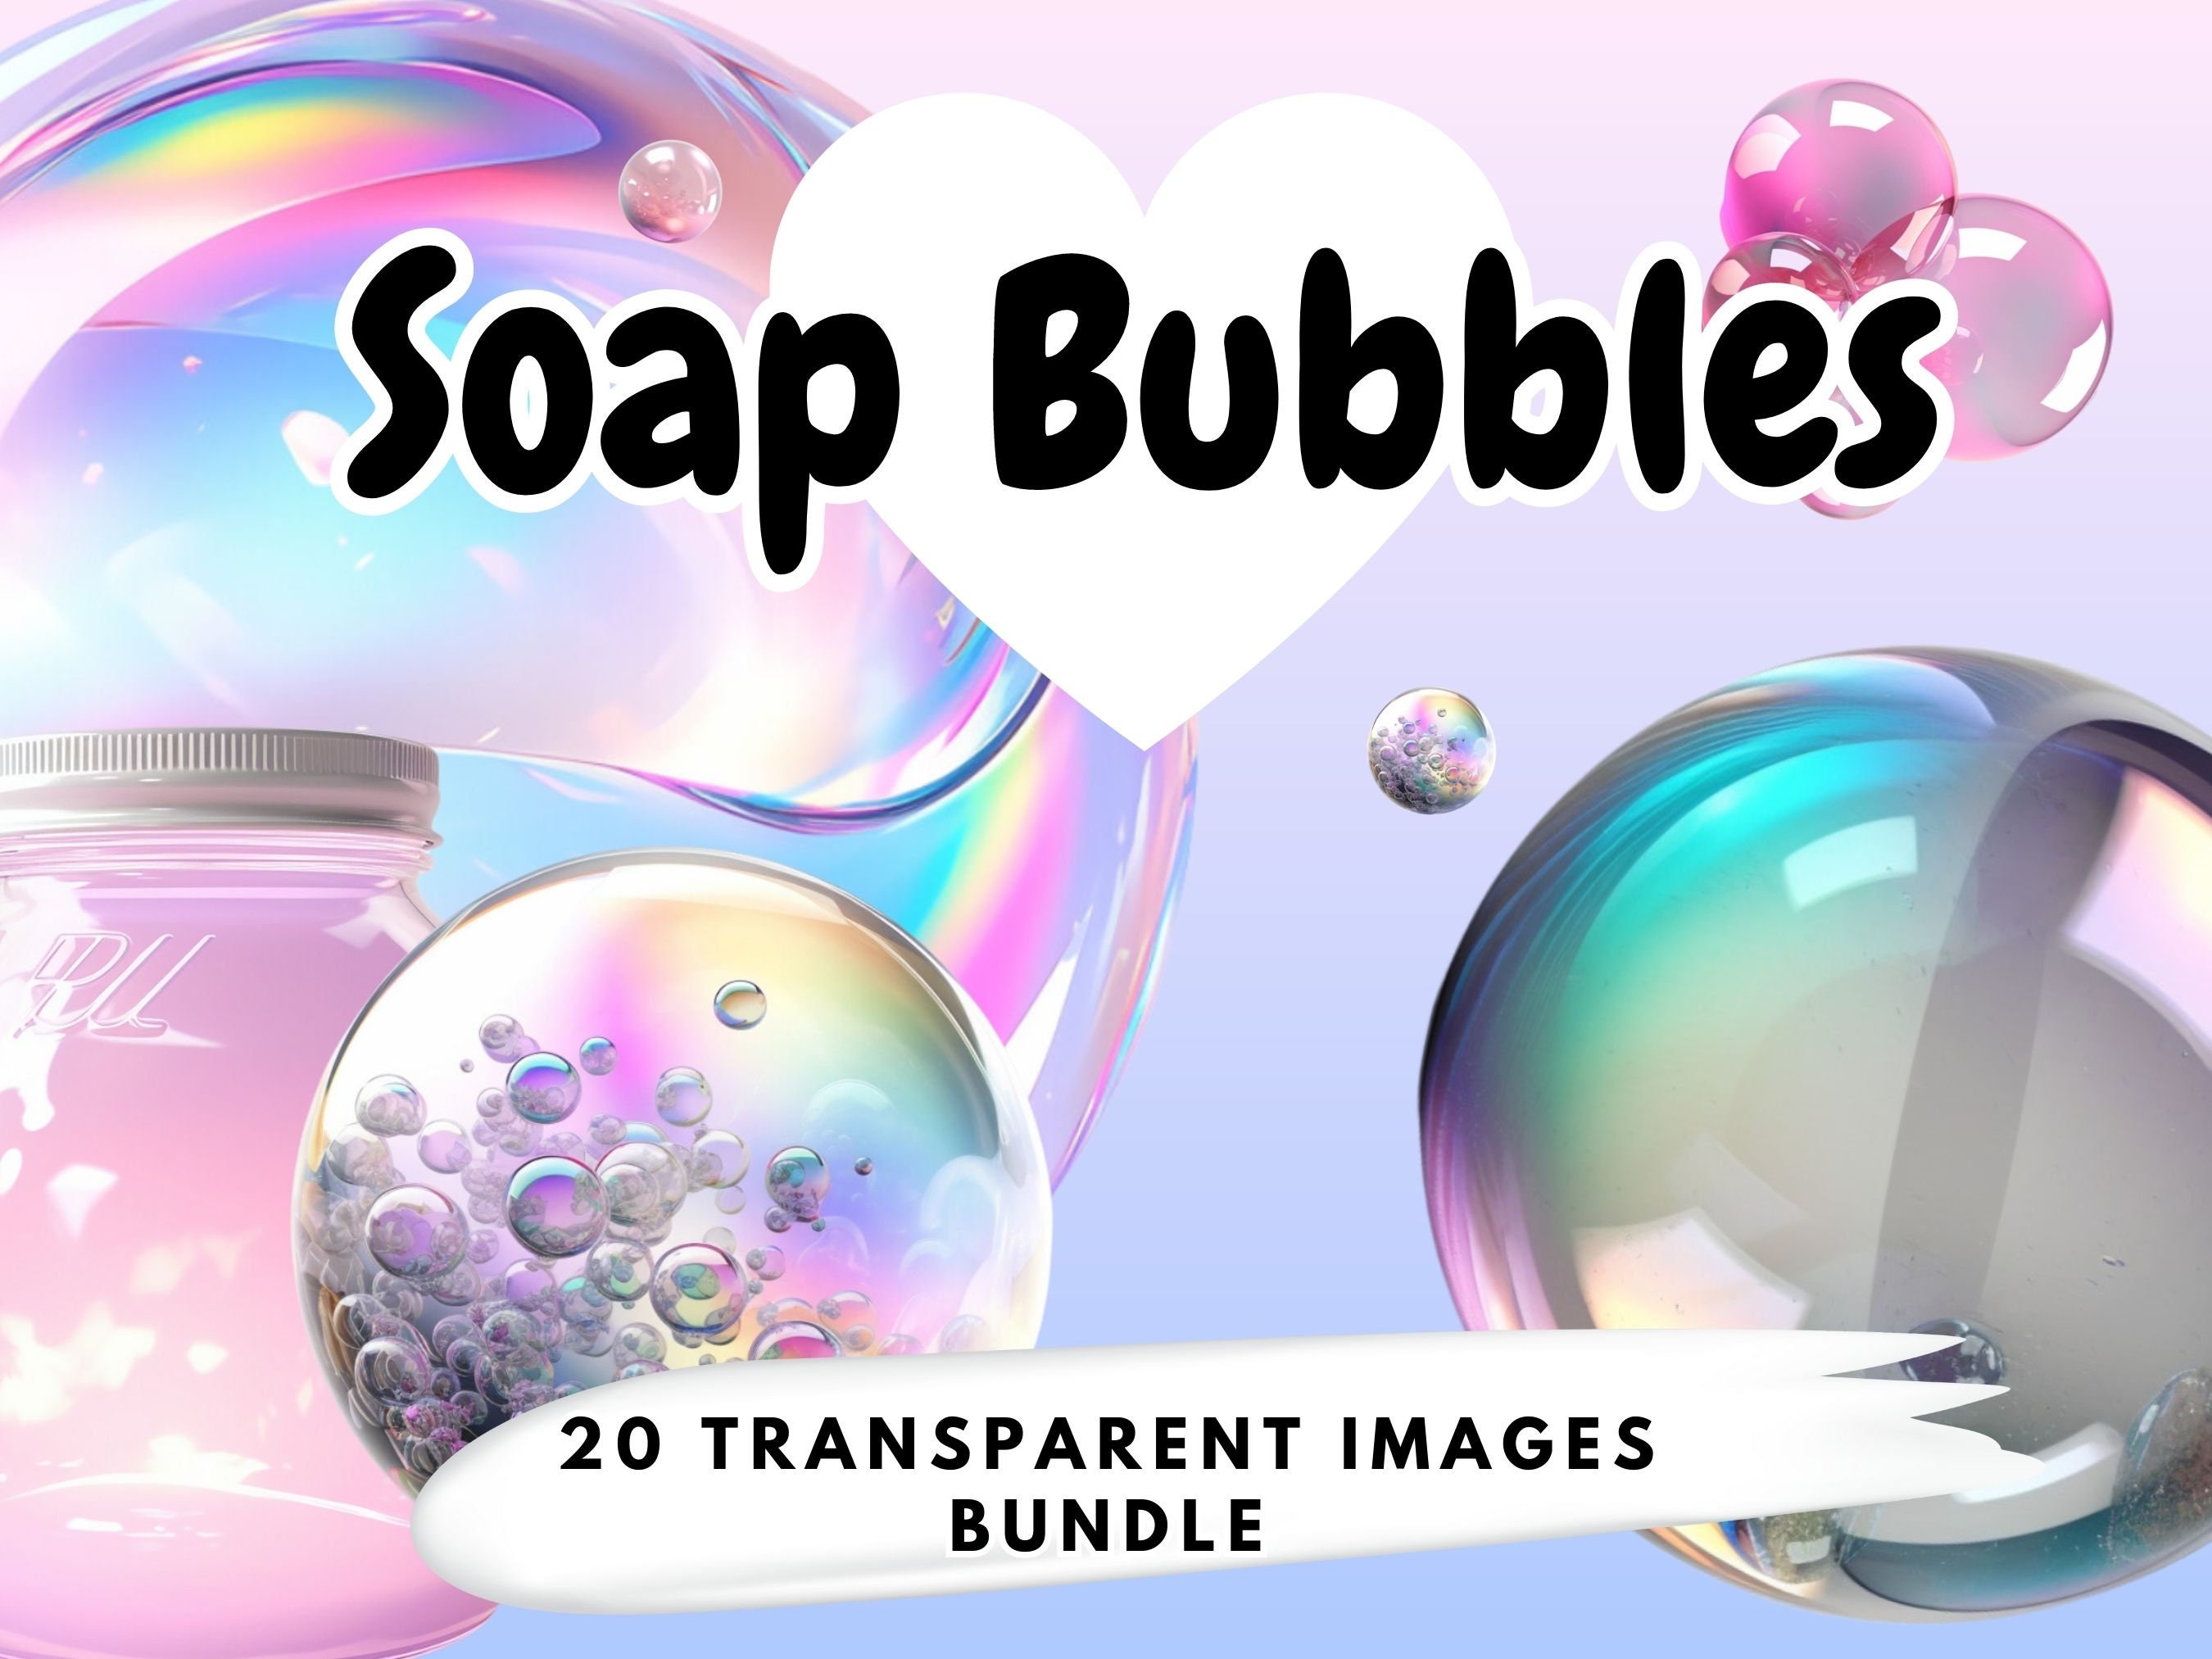 Single Rainbow bubble light design and design of 3 water bubbles